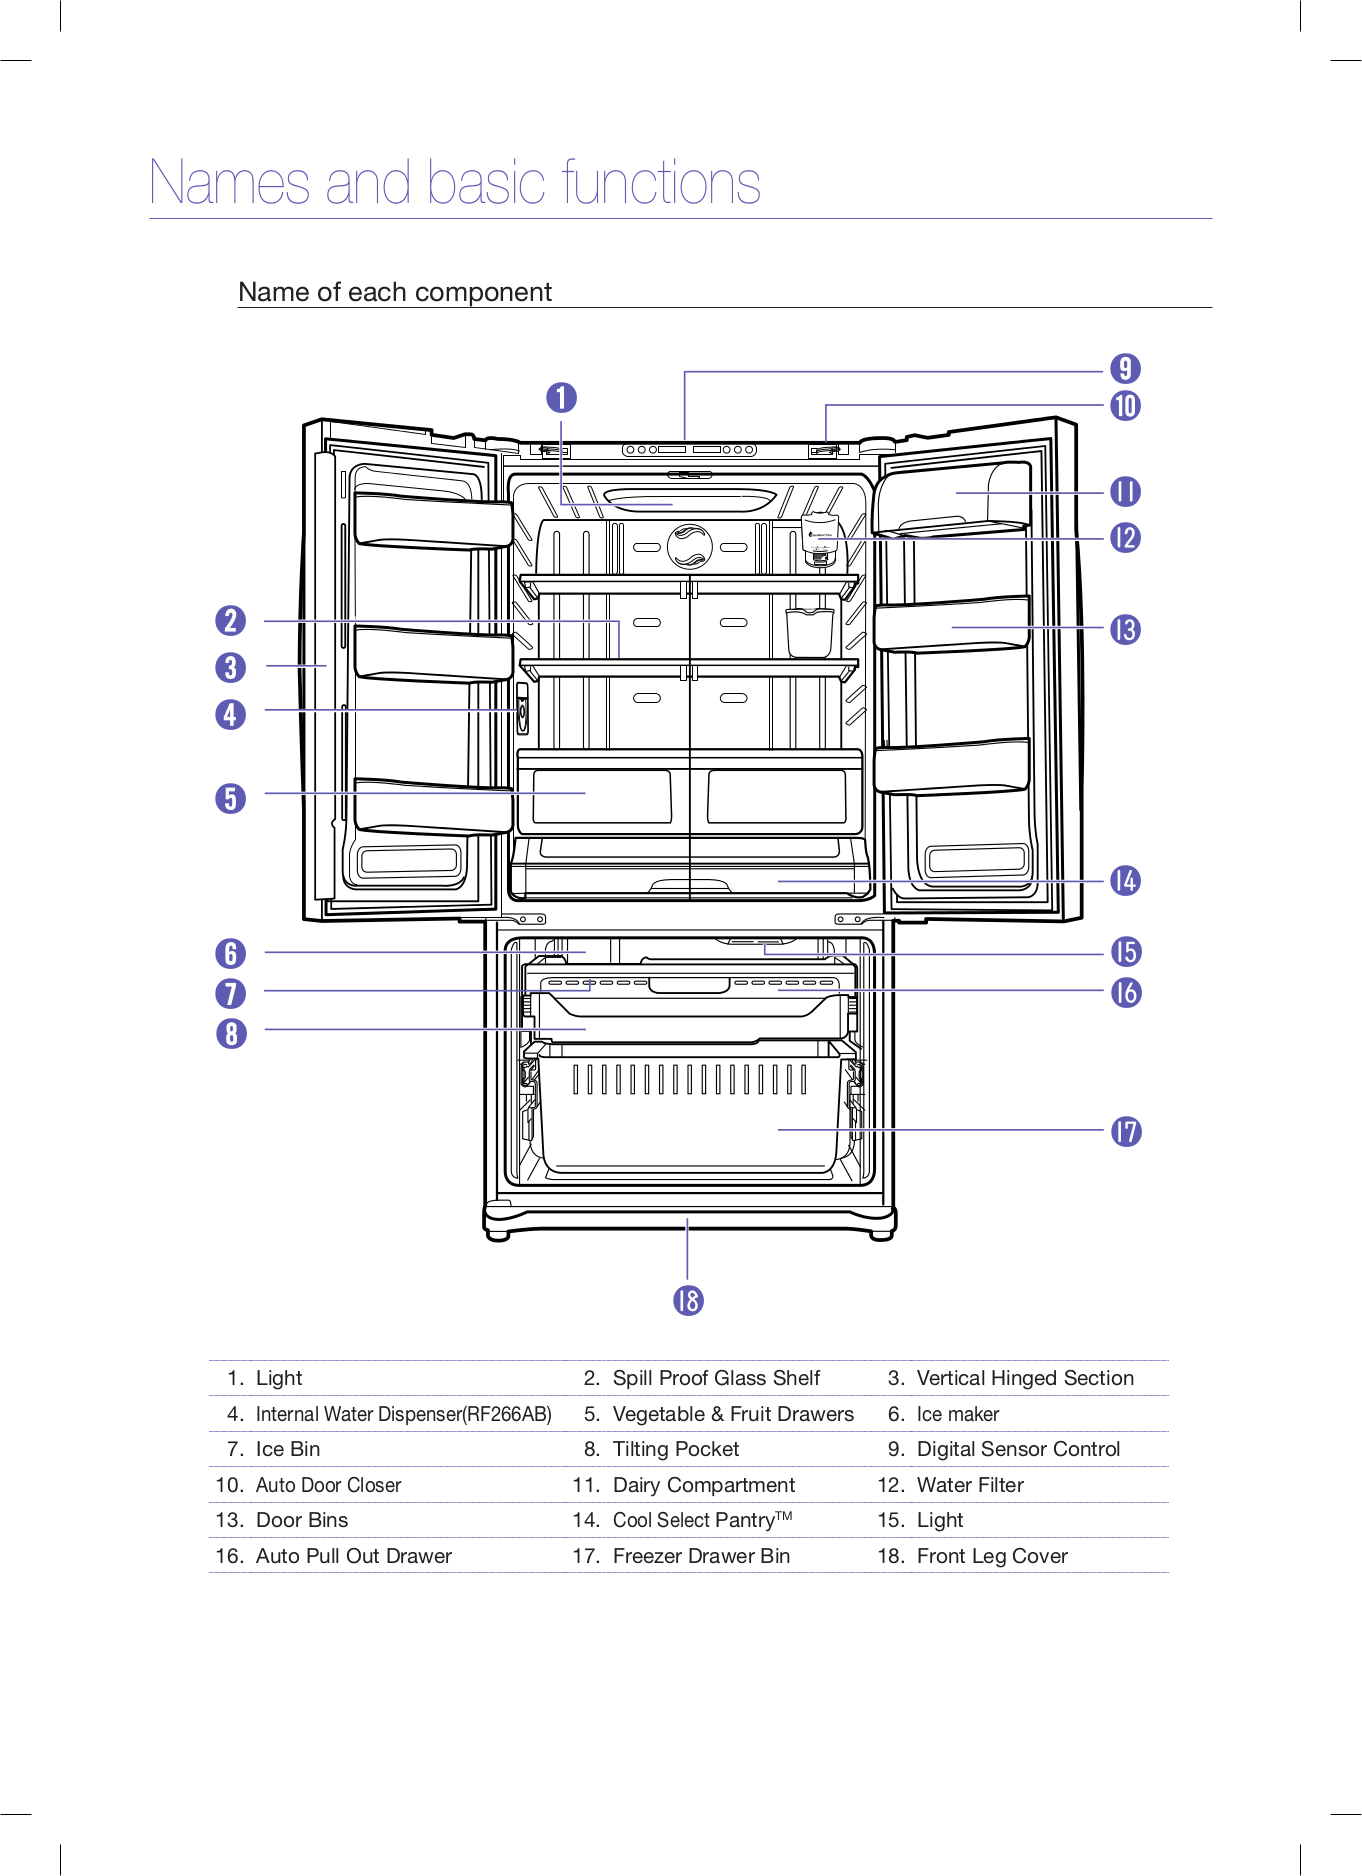 Samsung Refrigerator Rf18hfenbsr Manual